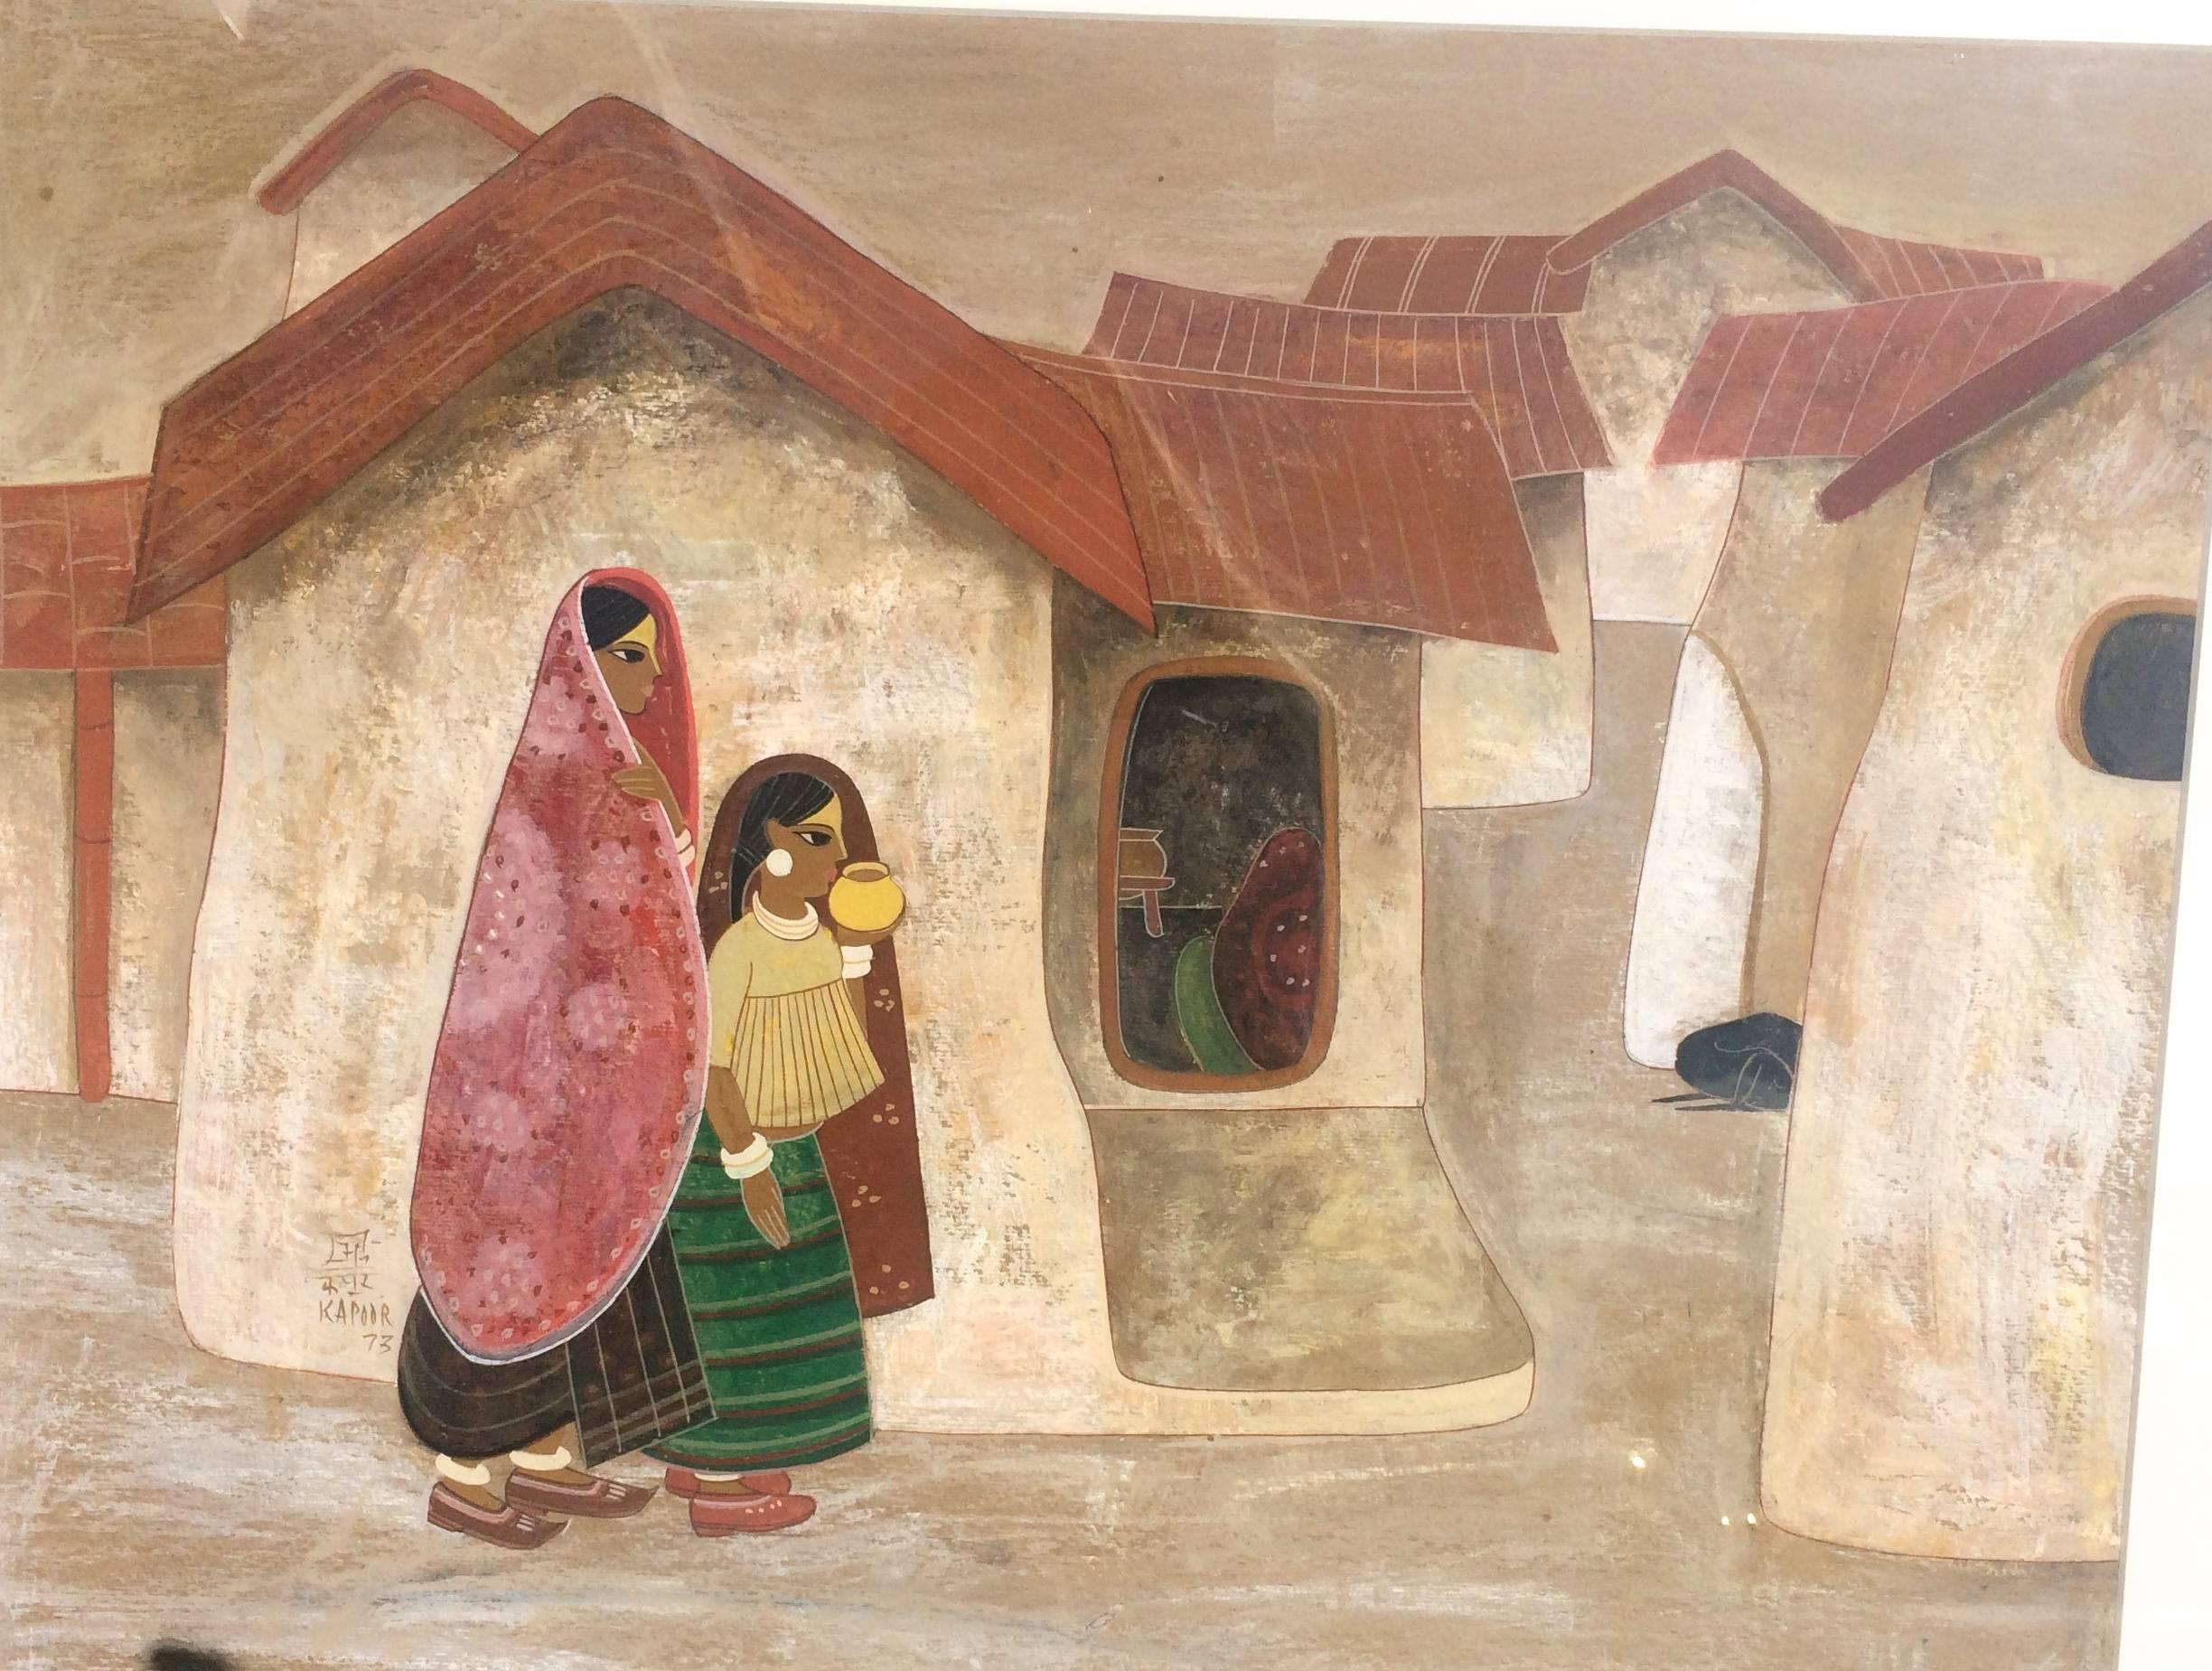 Village Girls - Painting by Bhagwan Kapoor